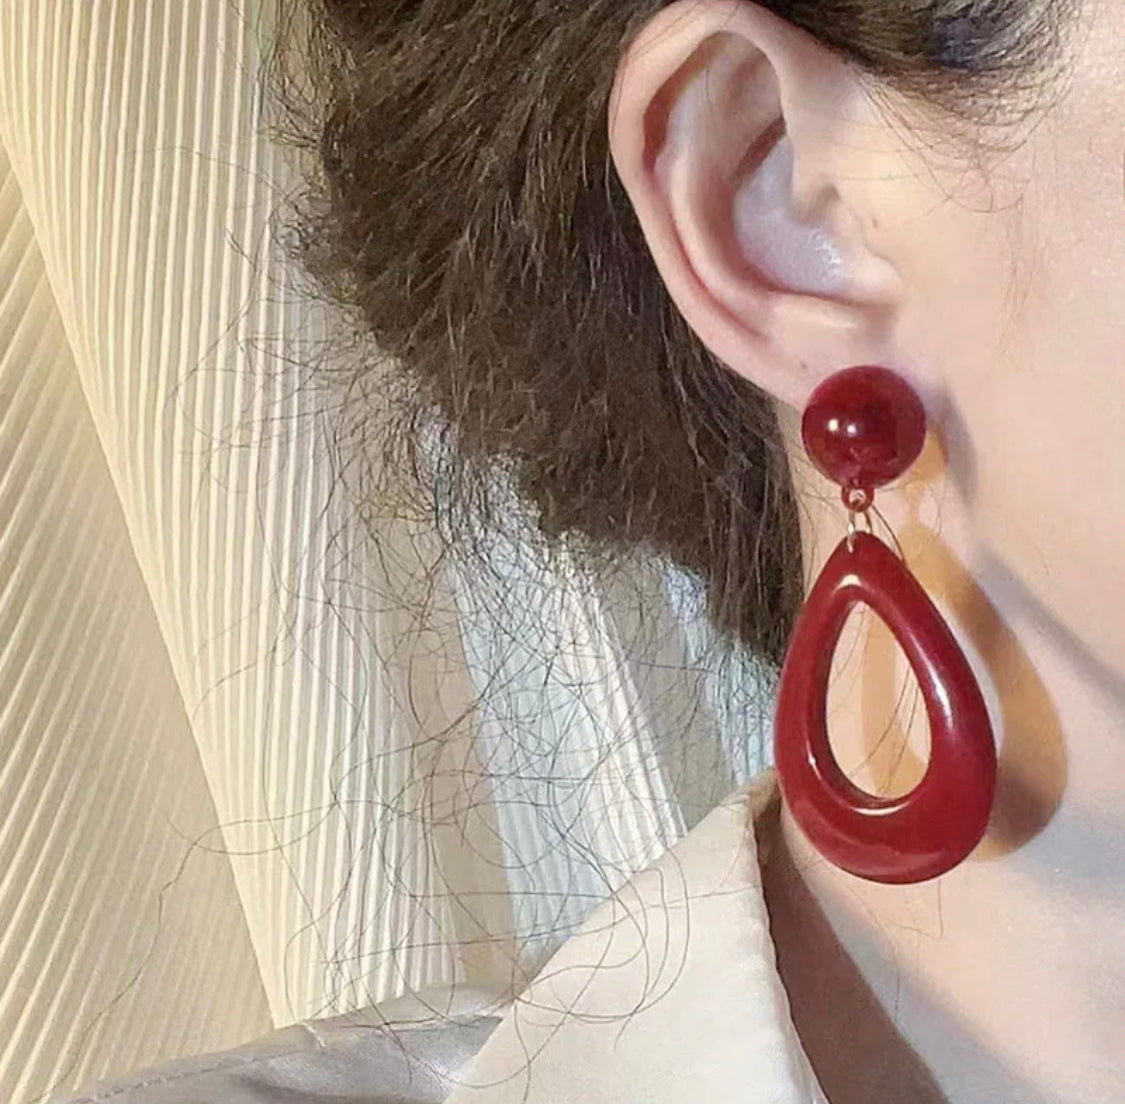 Clip on 2 3/4 Gold and Dark Red Hard Plastic Dangle Teardrop Earrings